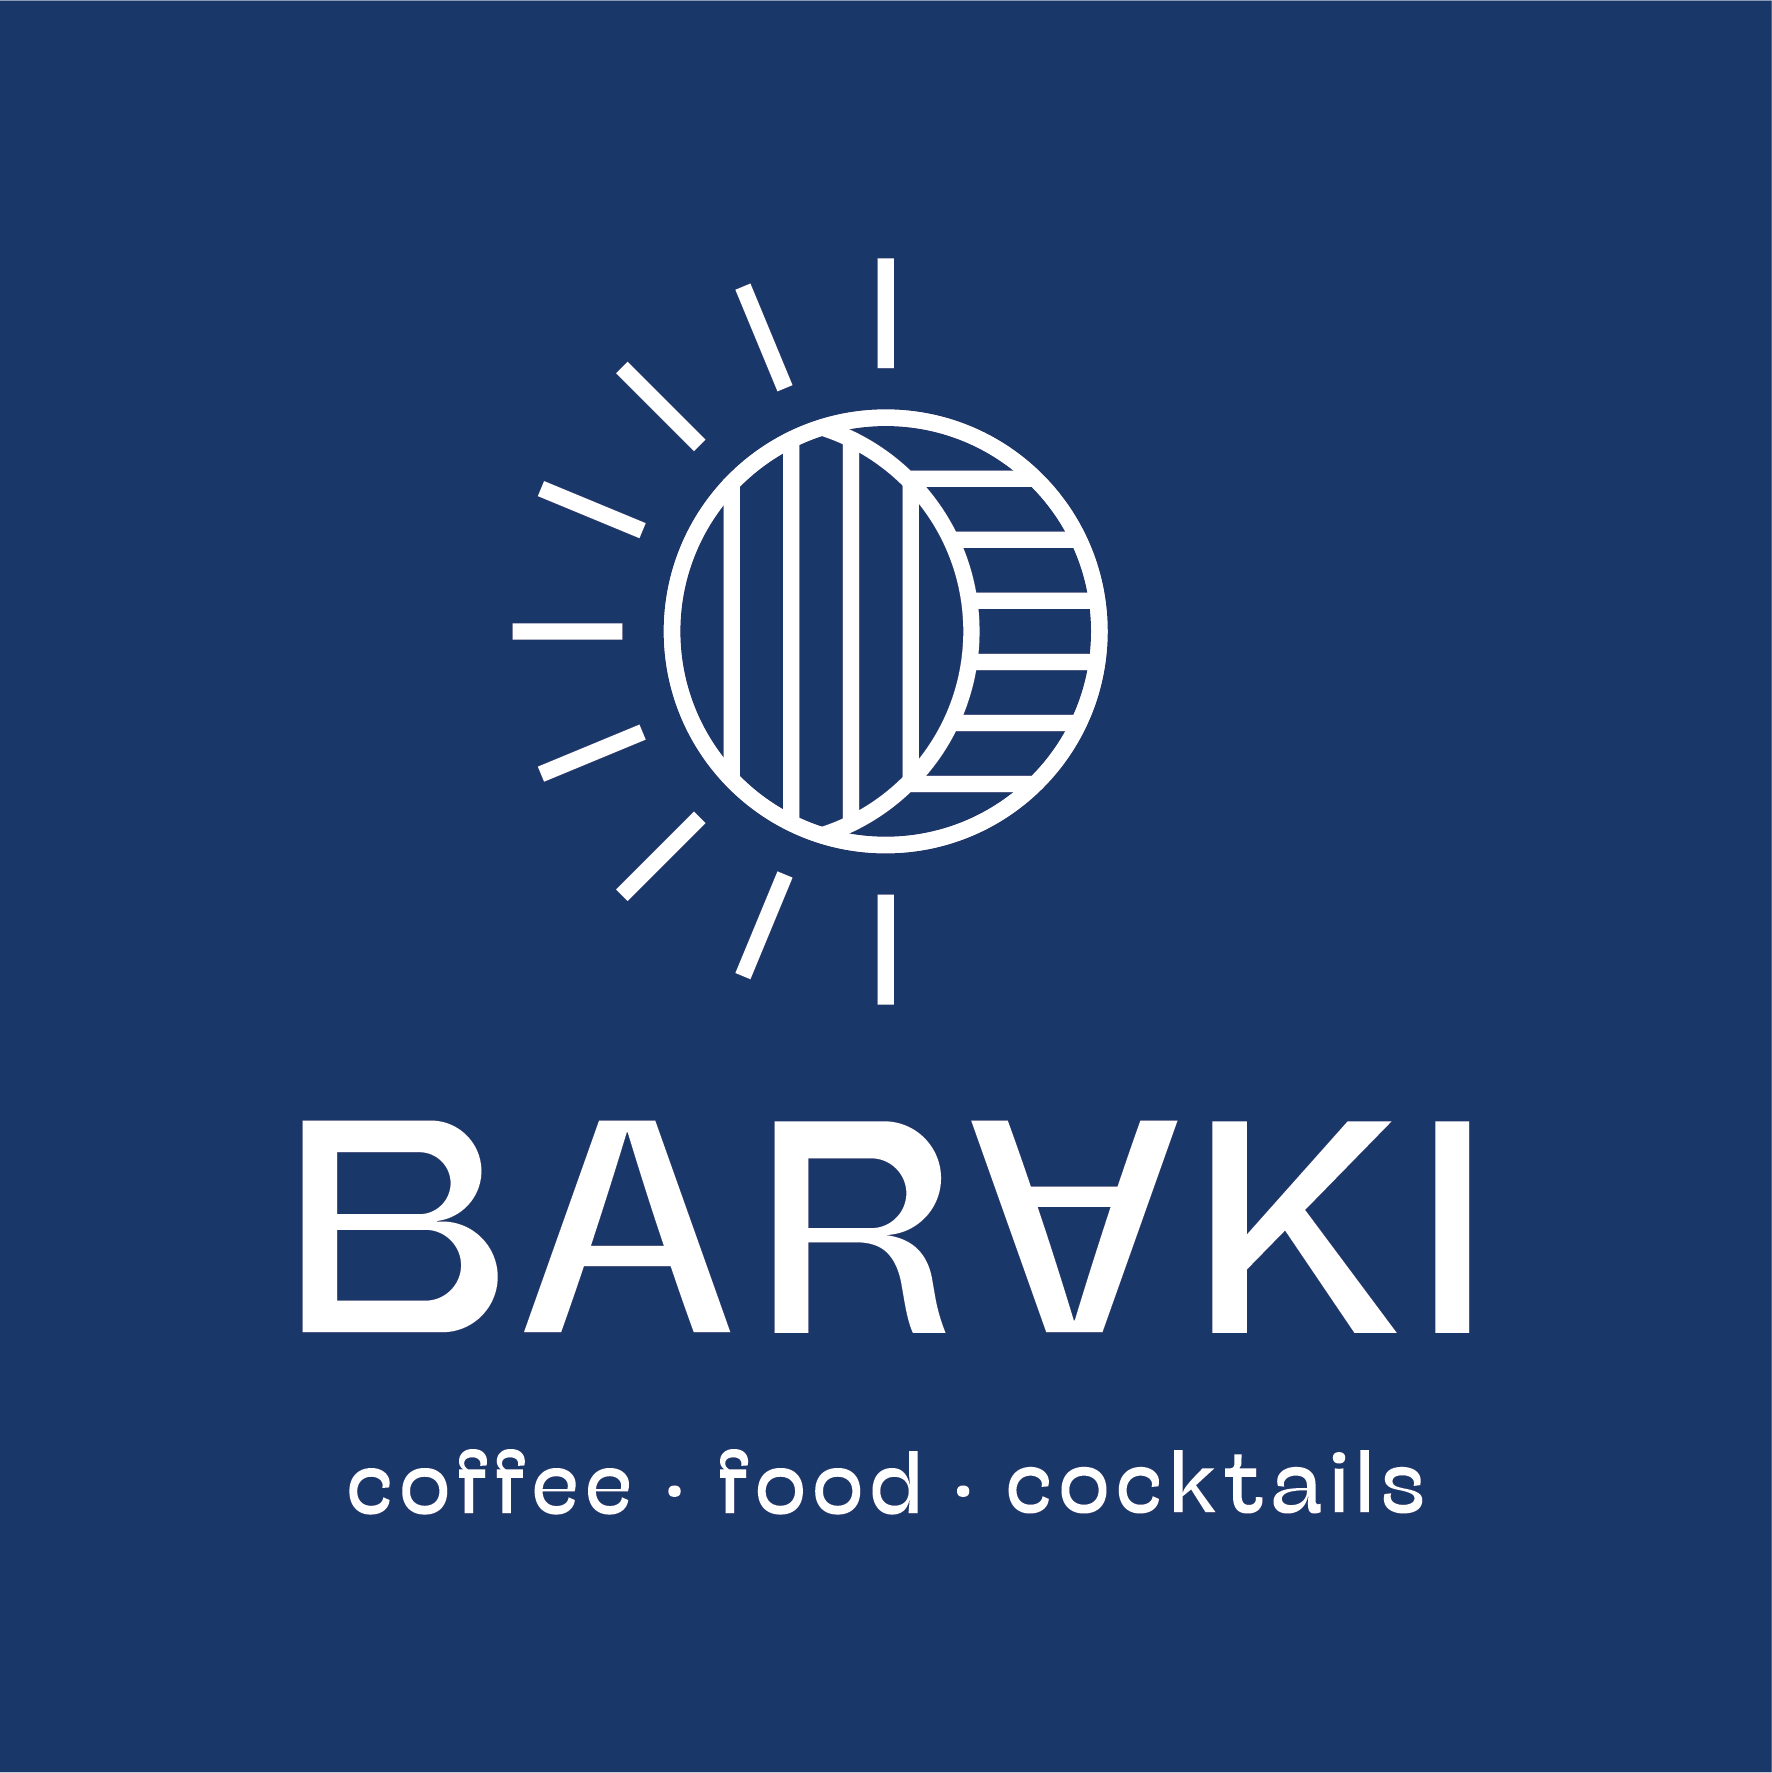 Baraki